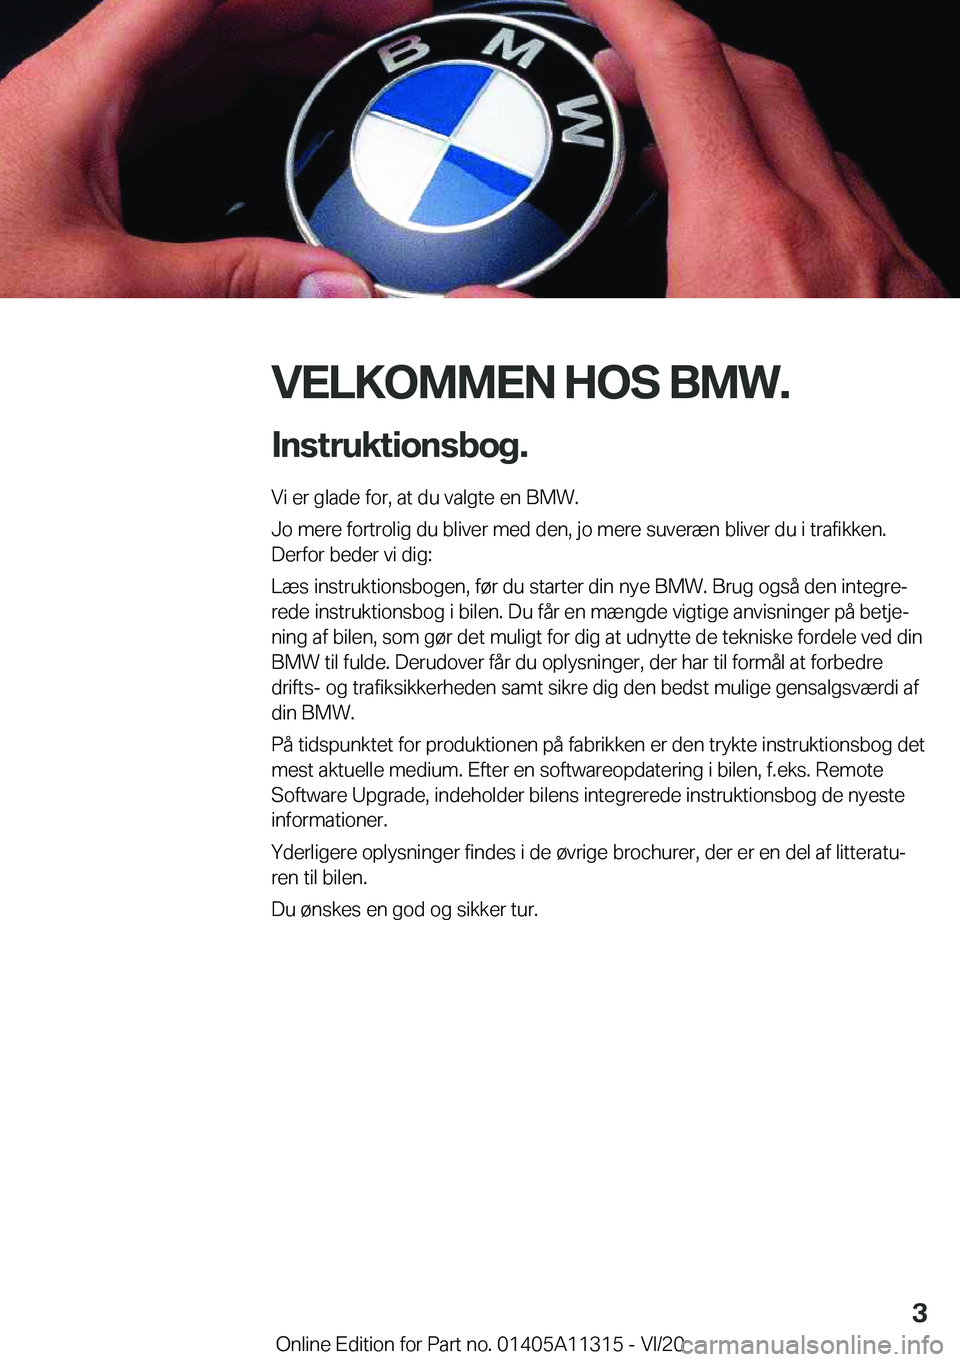 BMW 5 SERIES 2021  InstruktionsbØger (in Danish) �V�E�L�K�O�M�M�E�N��H�O�S��B�M�W�.
�I�n�s�t�r�u�k�t�i�o�n�s�b�o�g�. �V�i��e�r��g�l�a�d�e��f�o�r�,��a�t��d�u��v�a�l�g�t�e��e�n��B�M�W�.
�J�o��m�e�r�e��f�o�r�t�r�o�l�i�g��d�u��b�l�i�v�e�r�